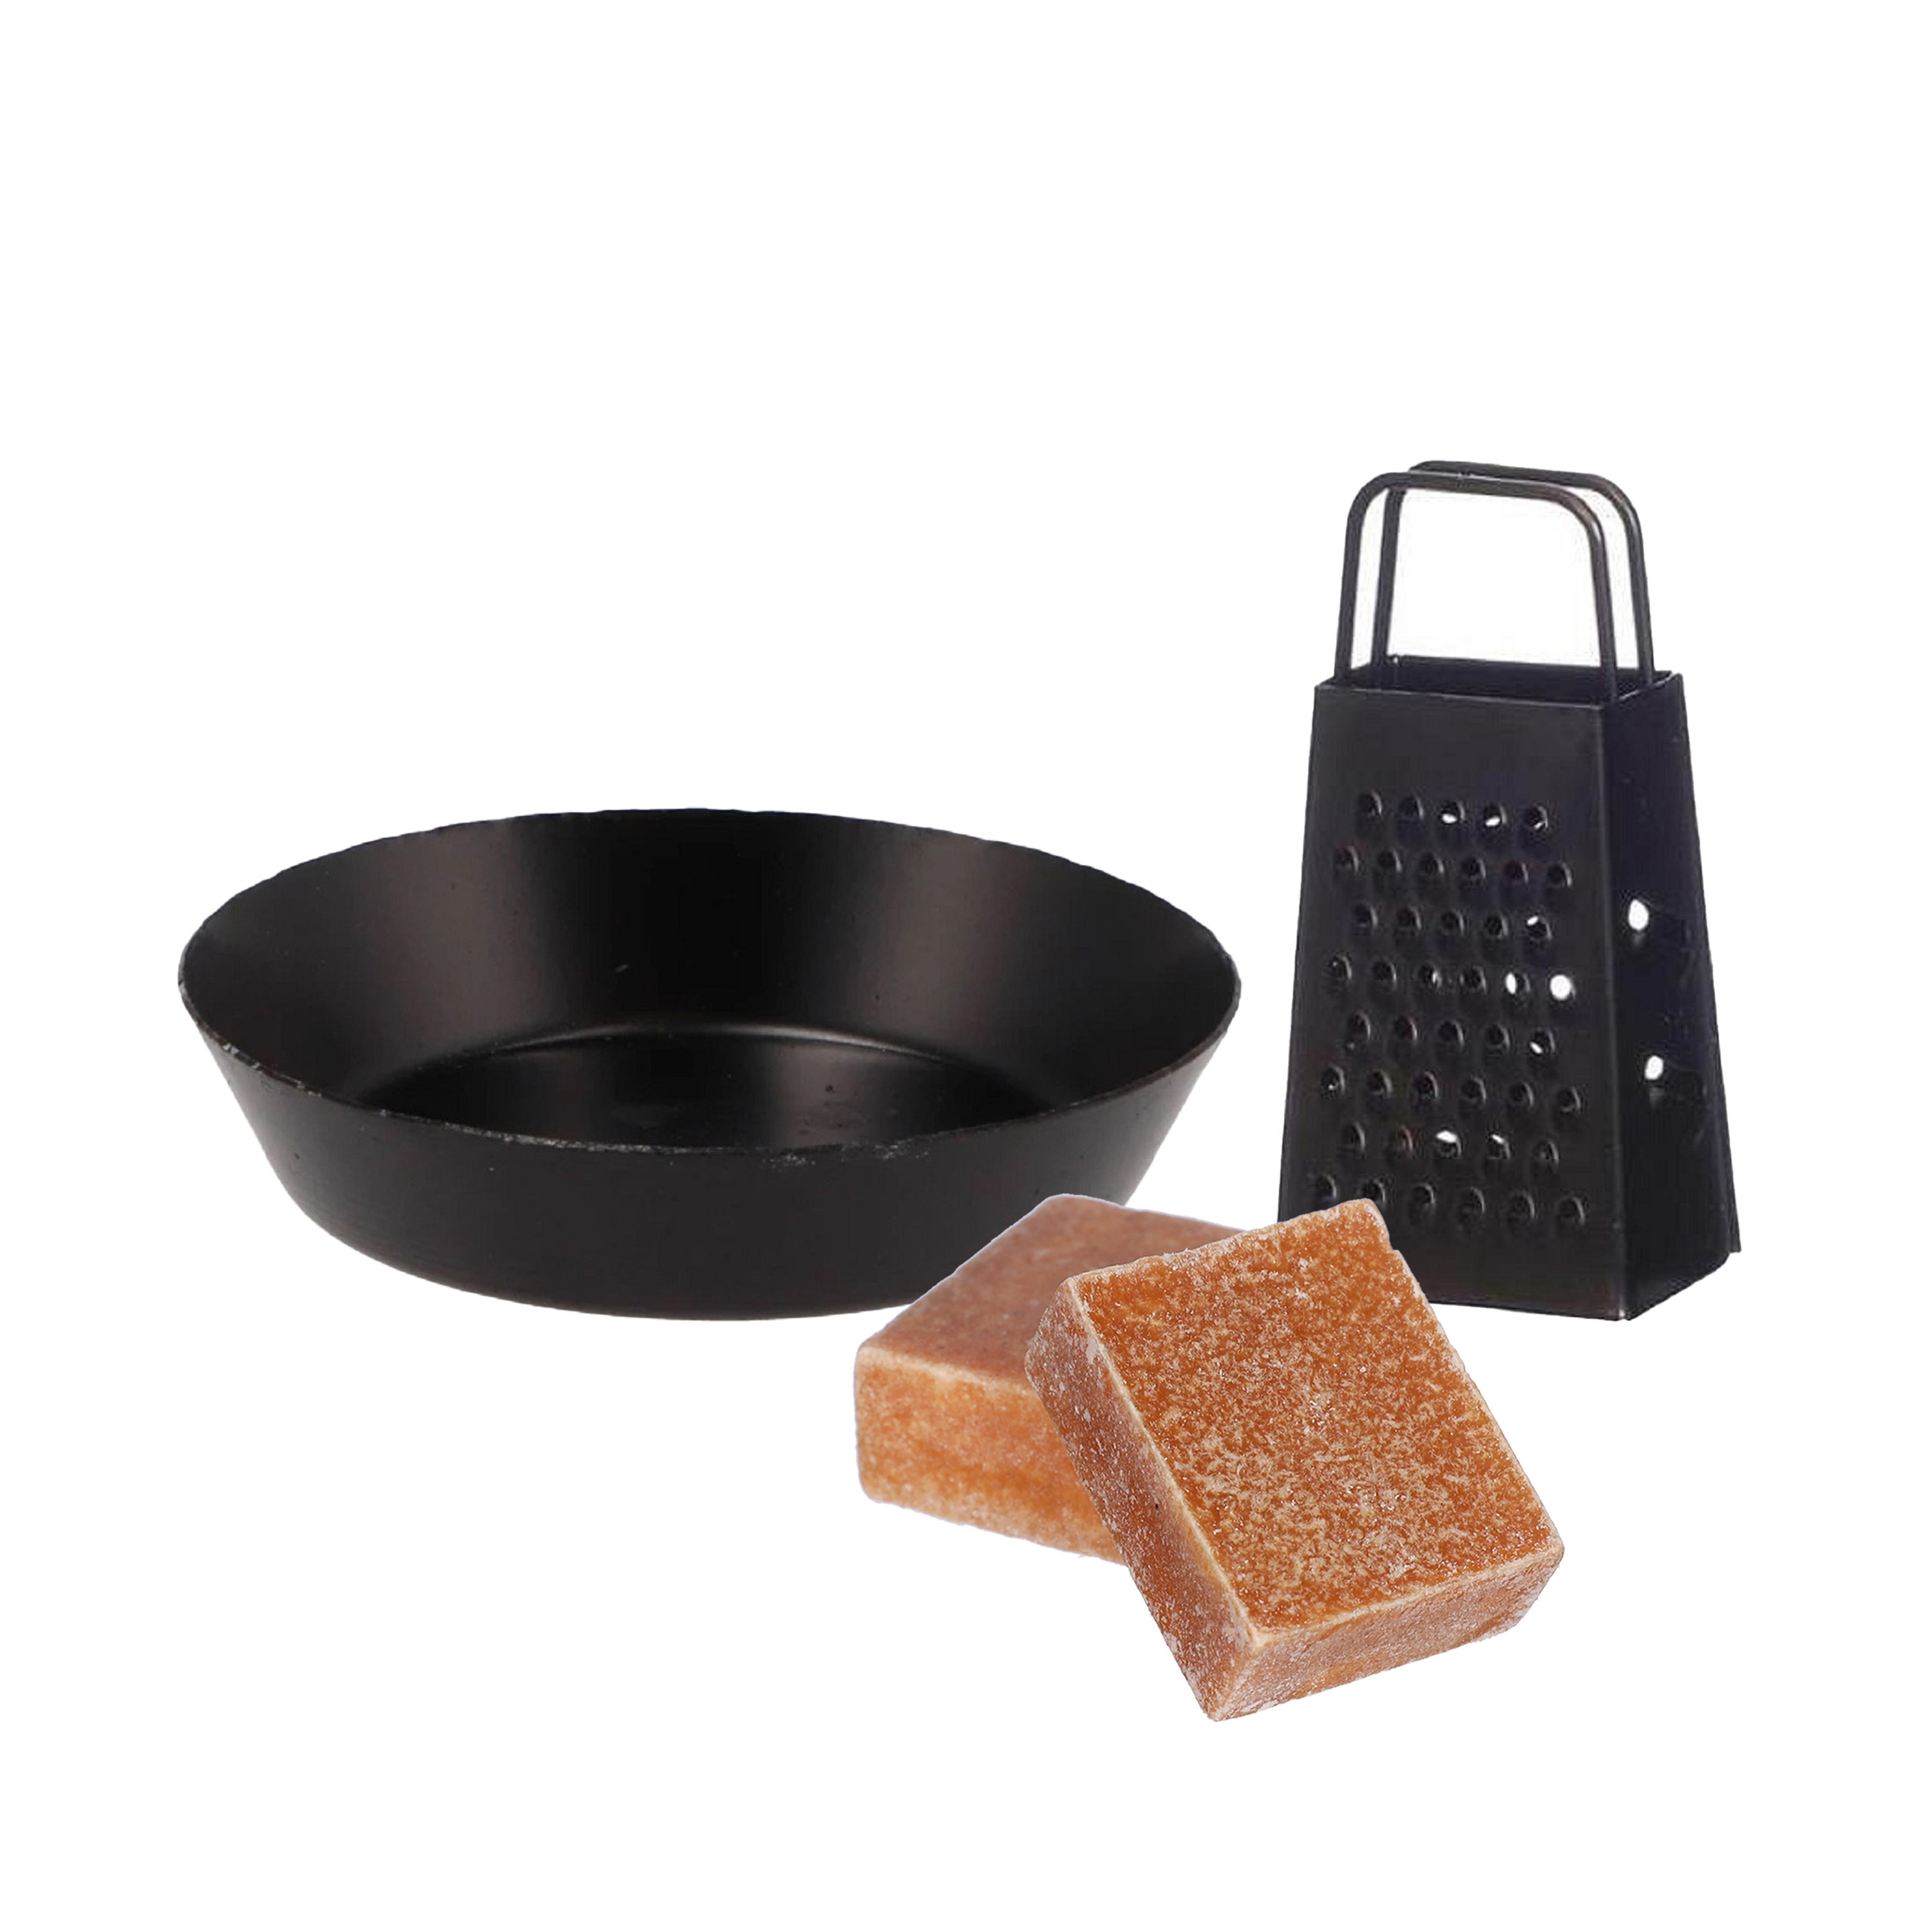 Amberblokjes-geurblokjes cadeauset amber geur inclusief schaaltje en mini rasp